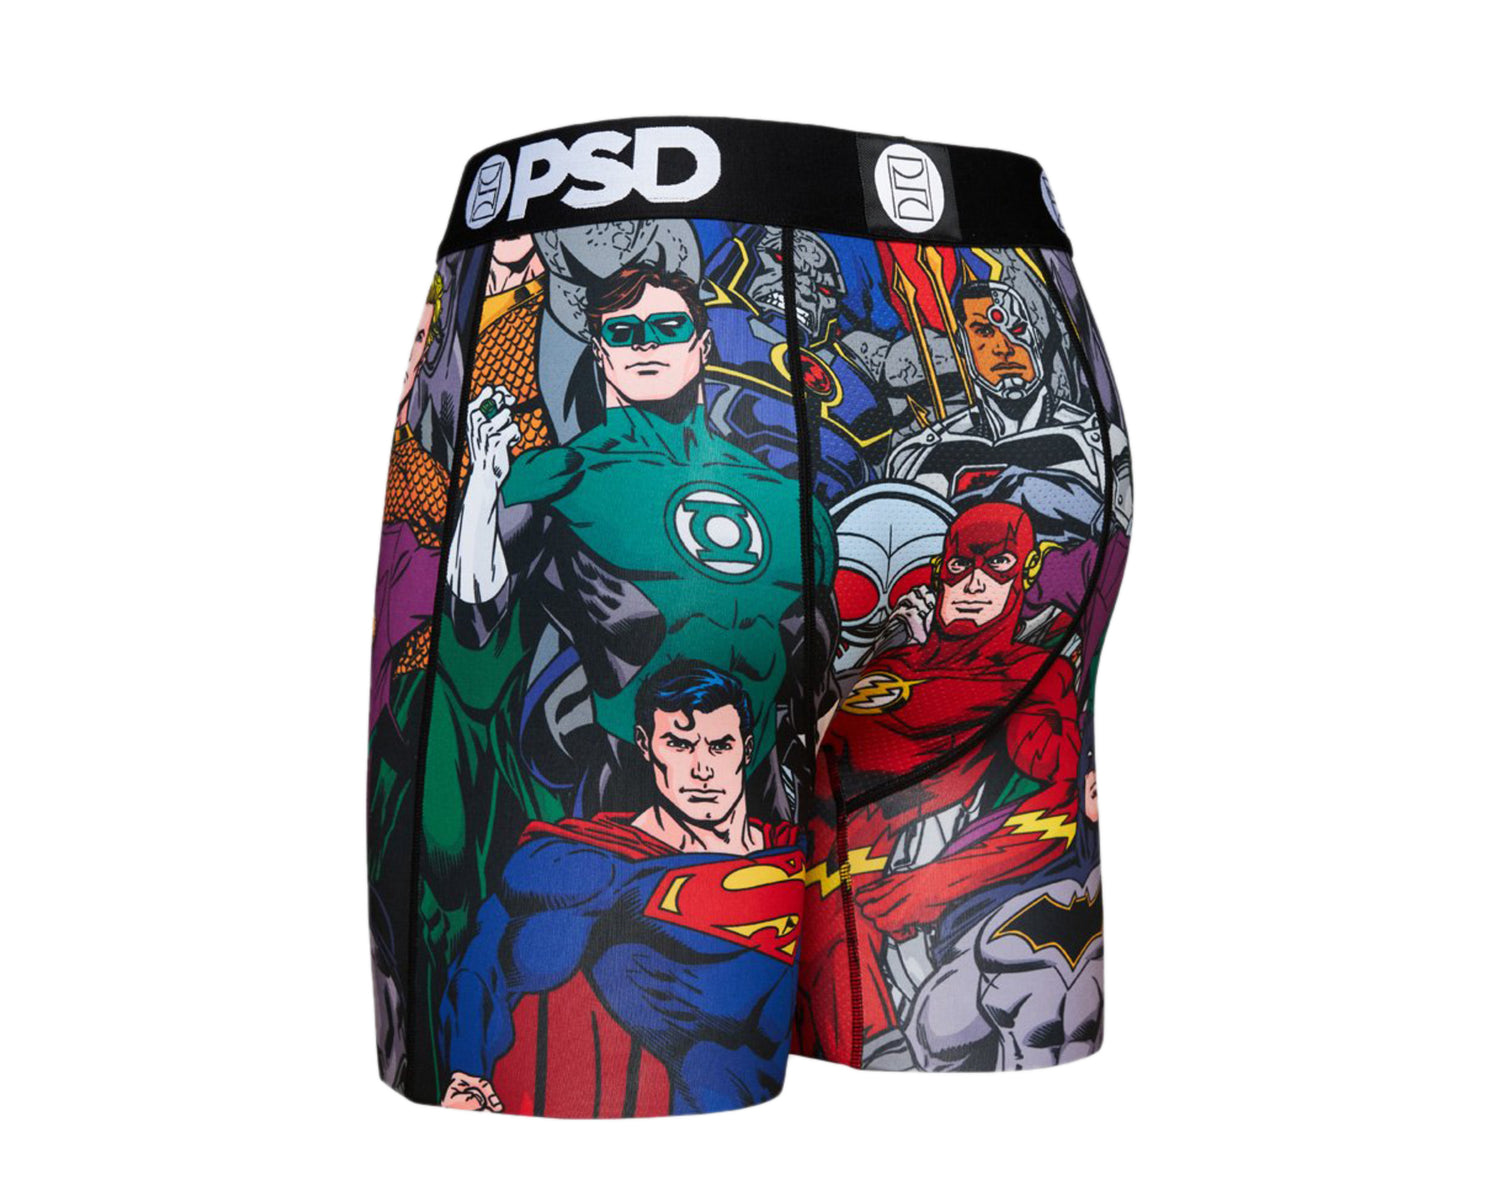 PSD DC - Boys Squad Boxer Briefs Men's Underwear